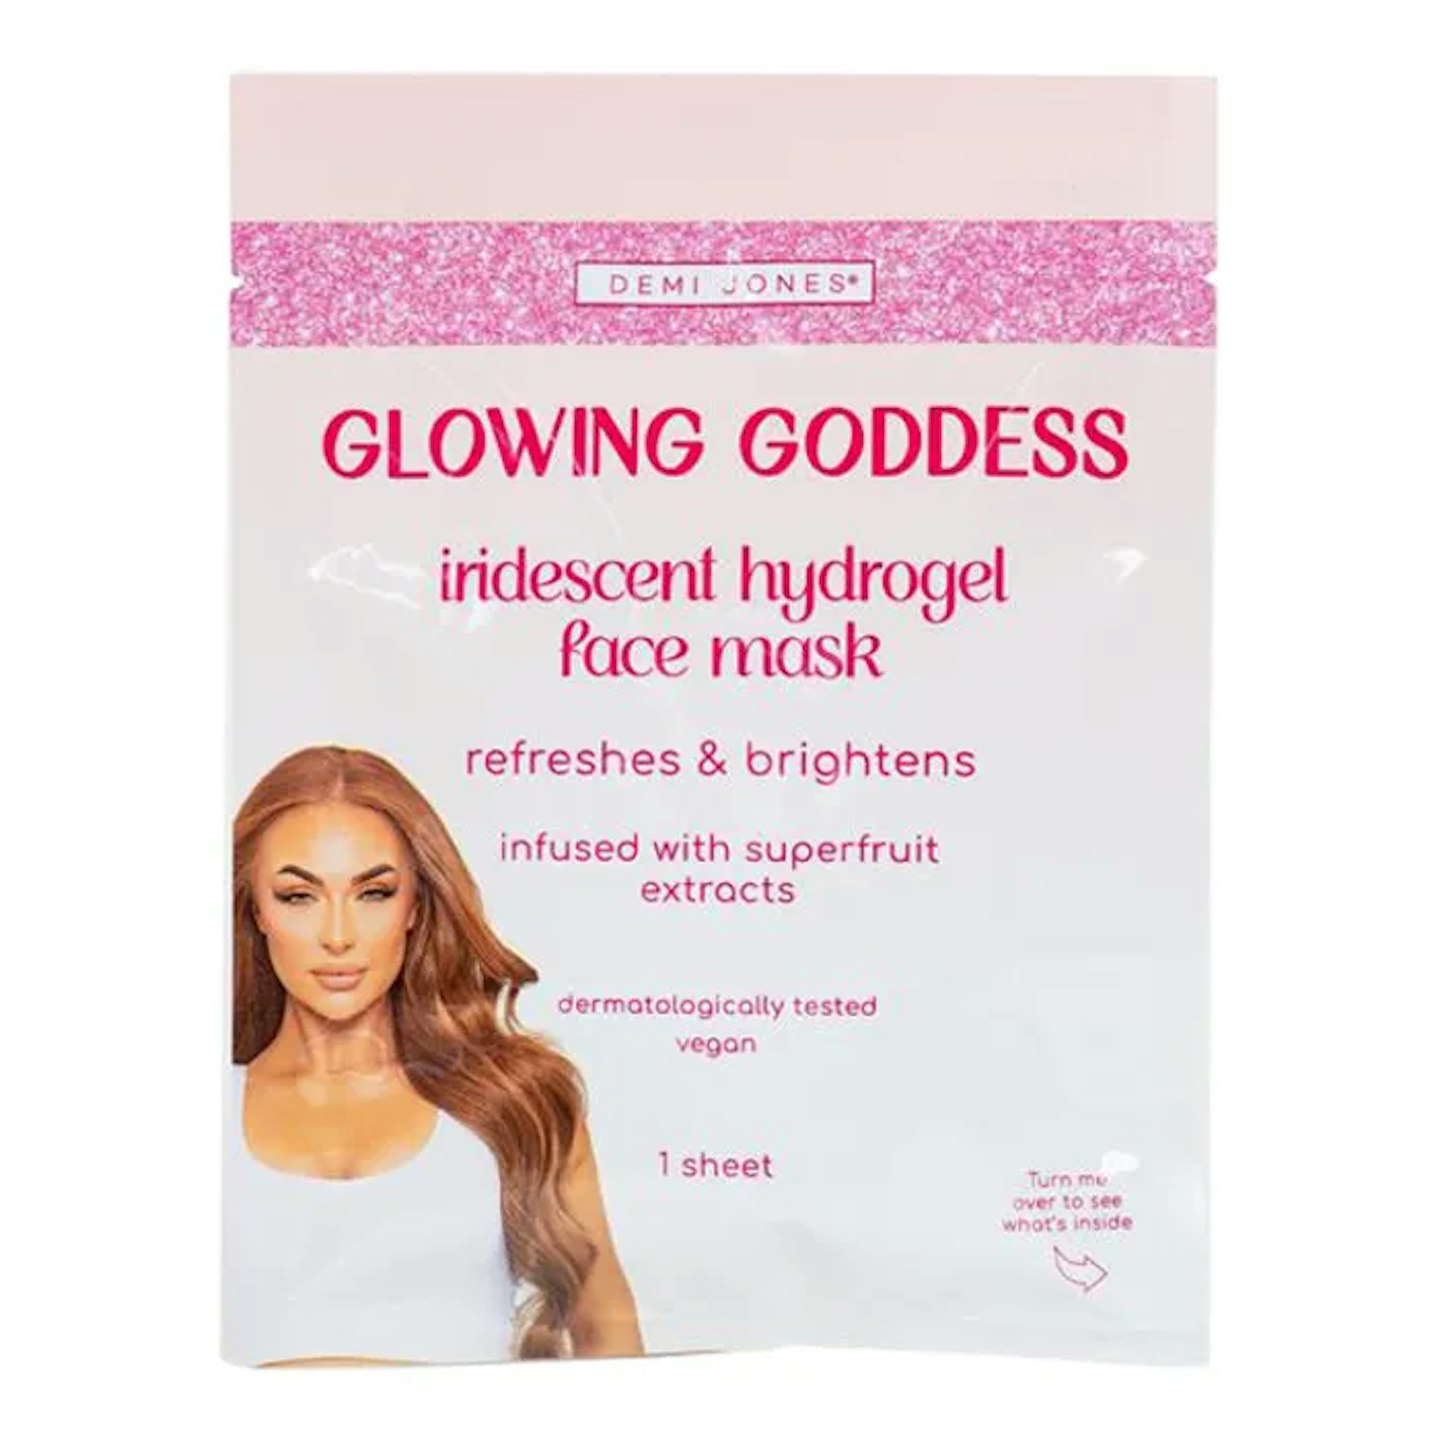 Demi Jones Glowing Goddess Iridescent Hydrogel Face Mask